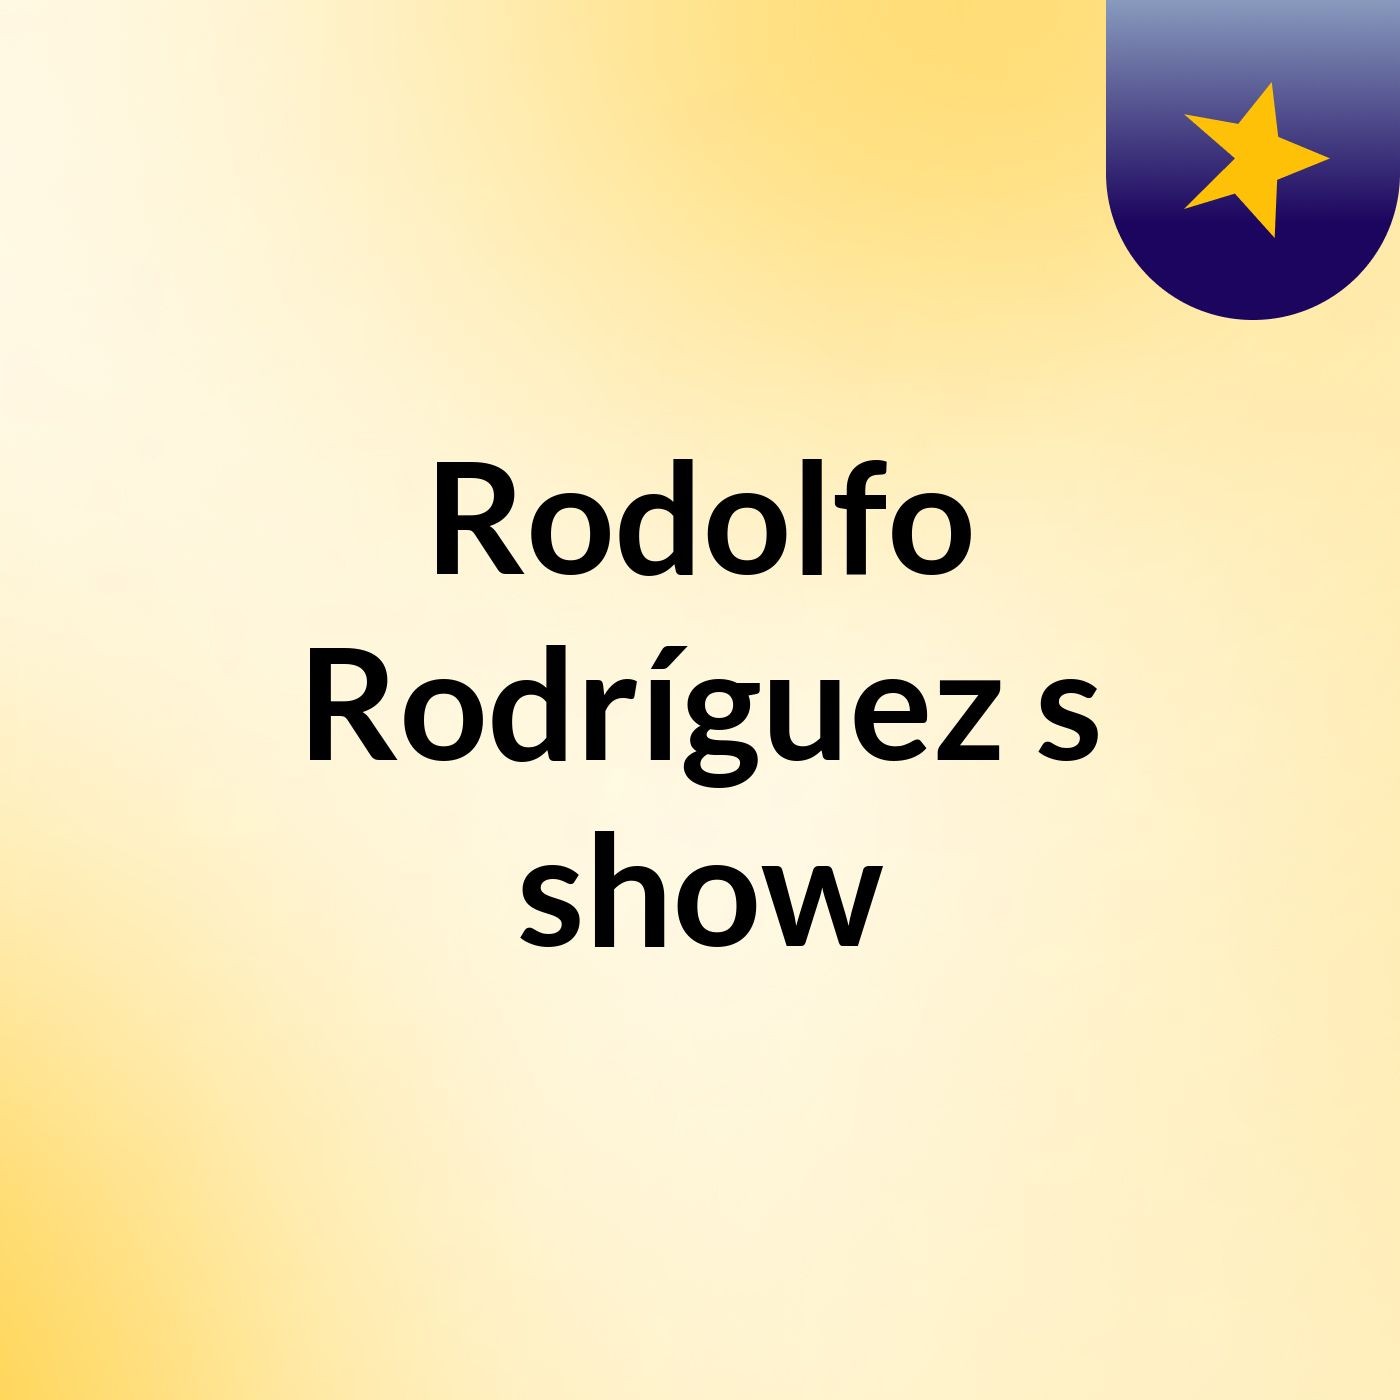 Rodolfo Rodríguez's show